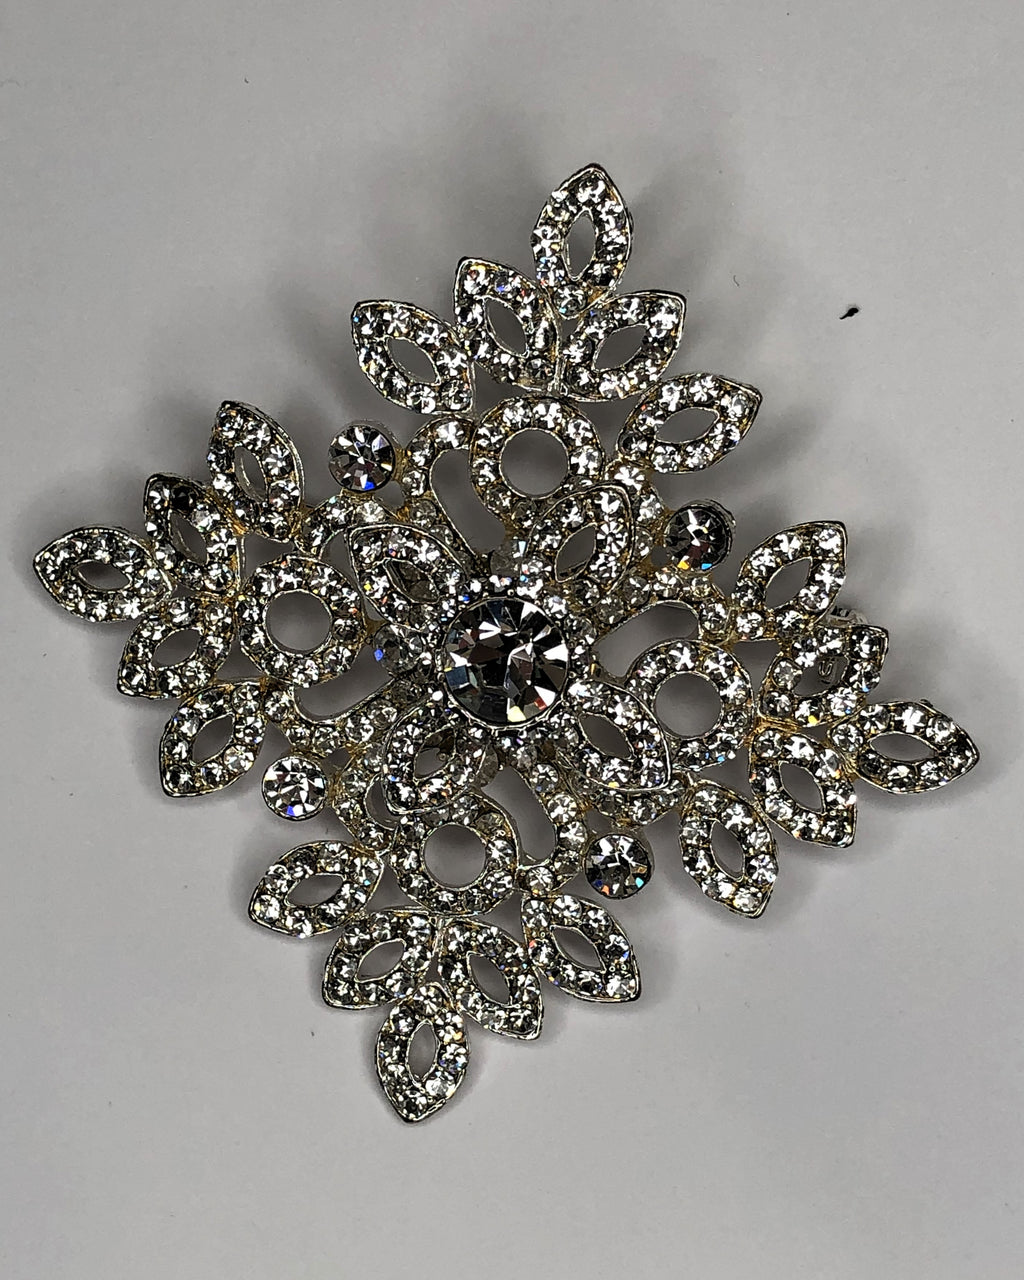 Large diamante encrusted snowflake brooch at erika